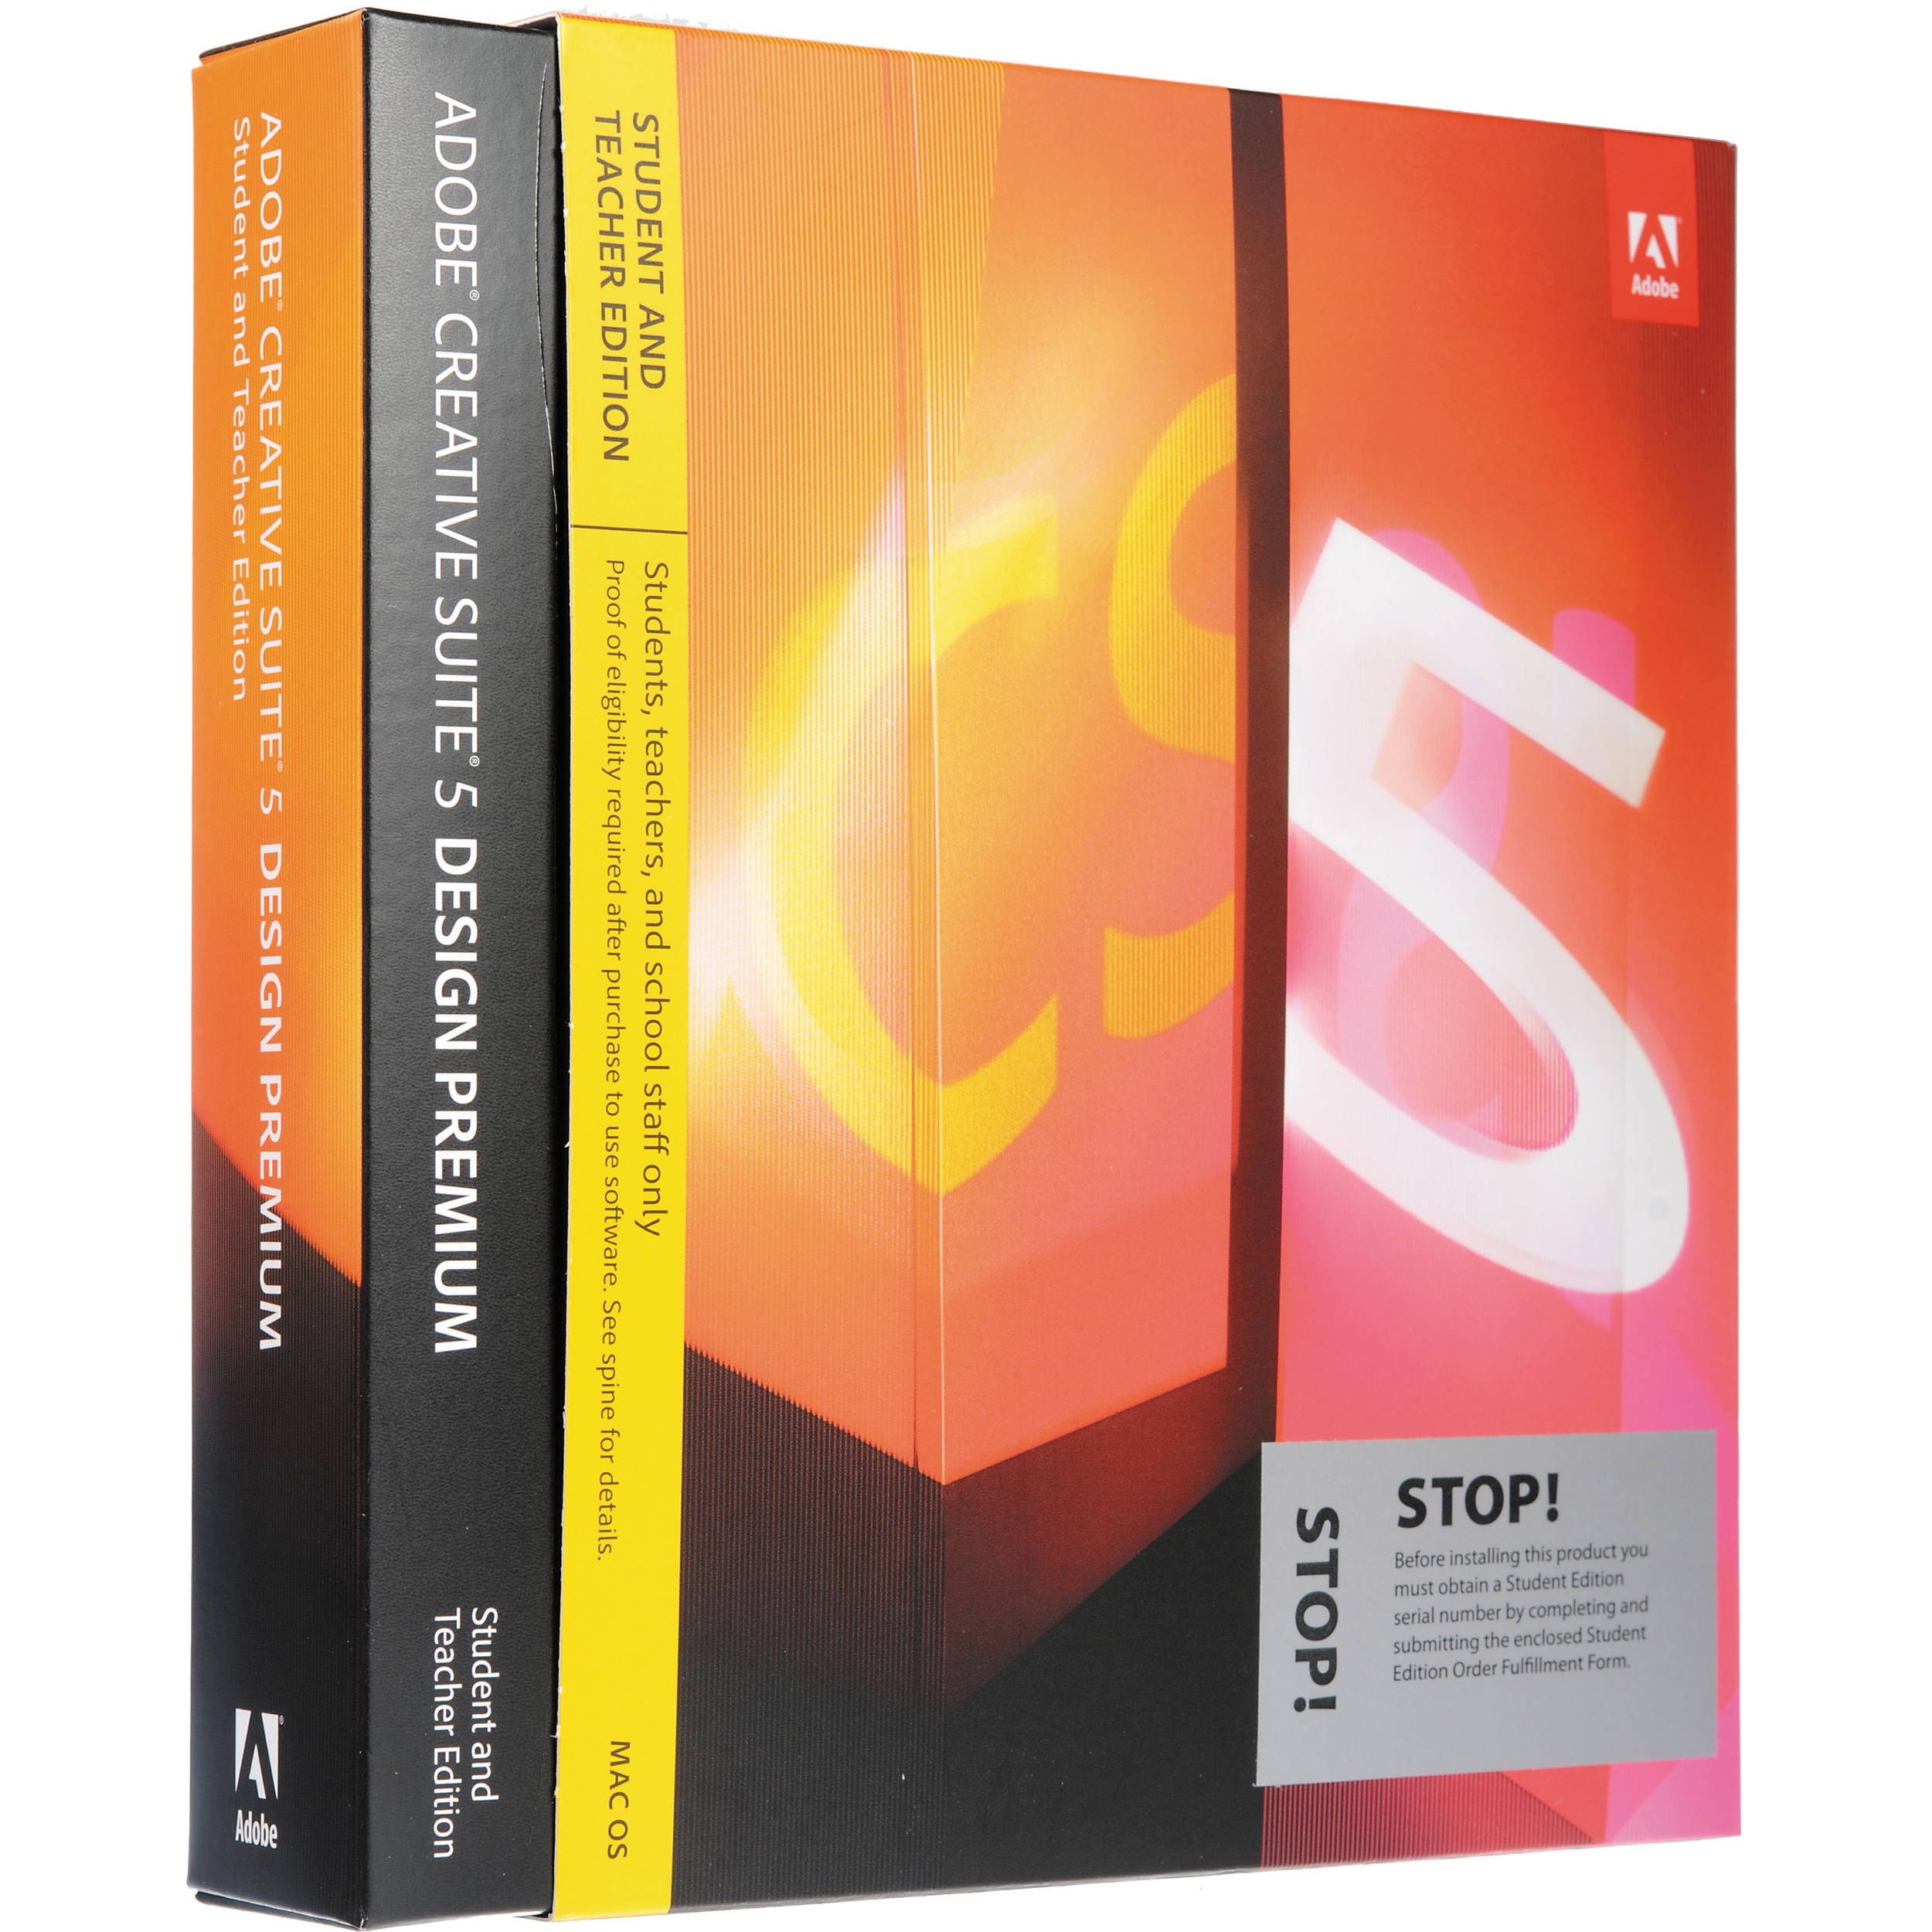 Buy Dreamweaver CS5.5 Student And Teacher Edition 64 bit